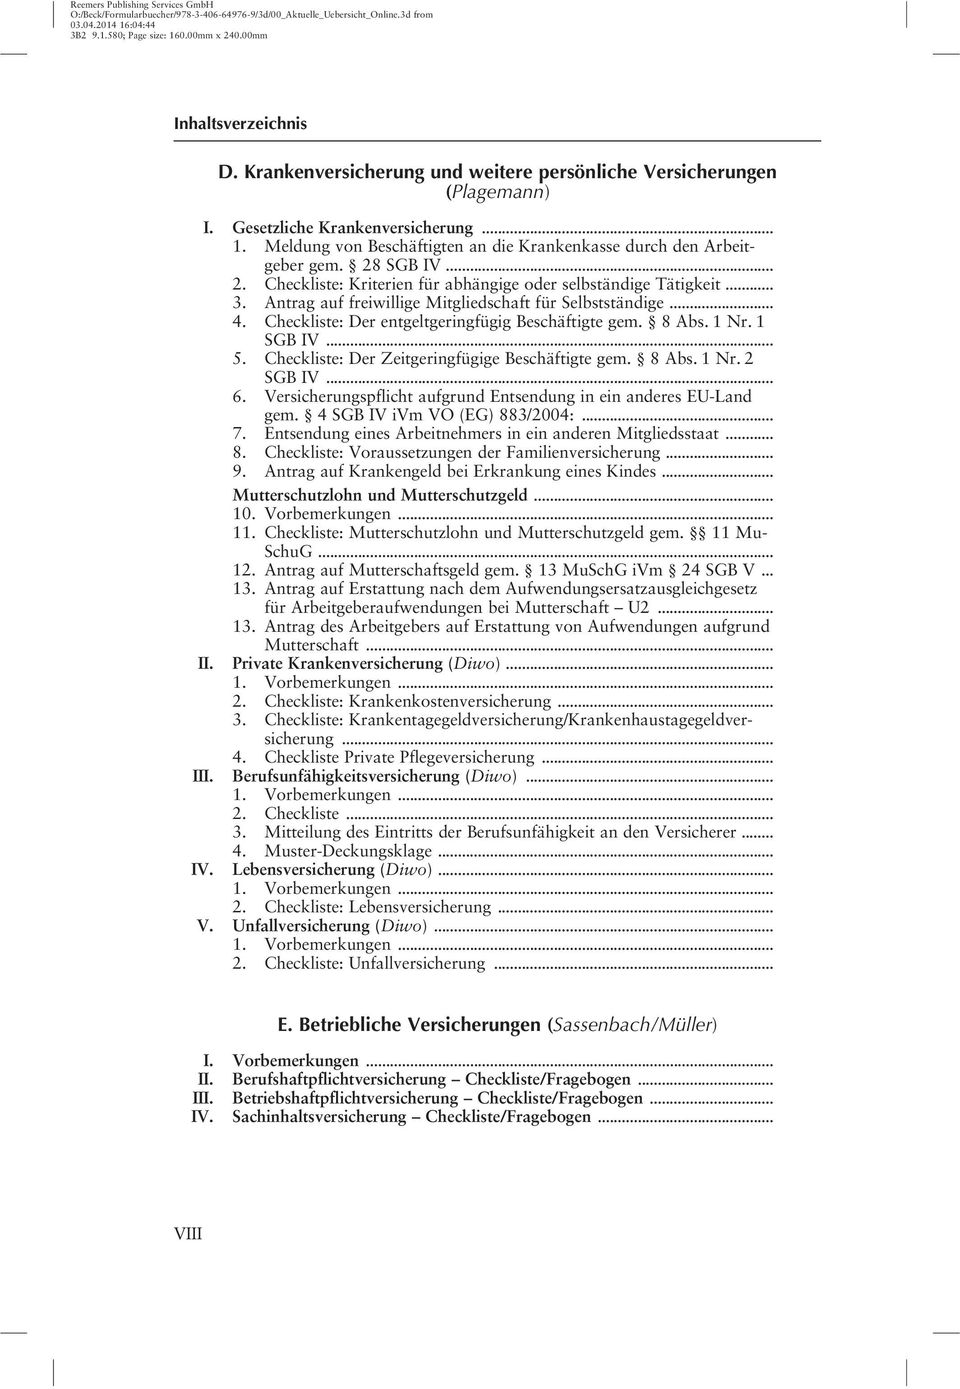 Checkliste: Der entgeltgeringfügig Beschäftigte gem. 8 Abs. 1 Nr. 1 SGB IV... 5. Checkliste: Der Zeitgeringfügige Beschäftigte gem. 8 Abs. 1 Nr. 2 SGB IV... 6.